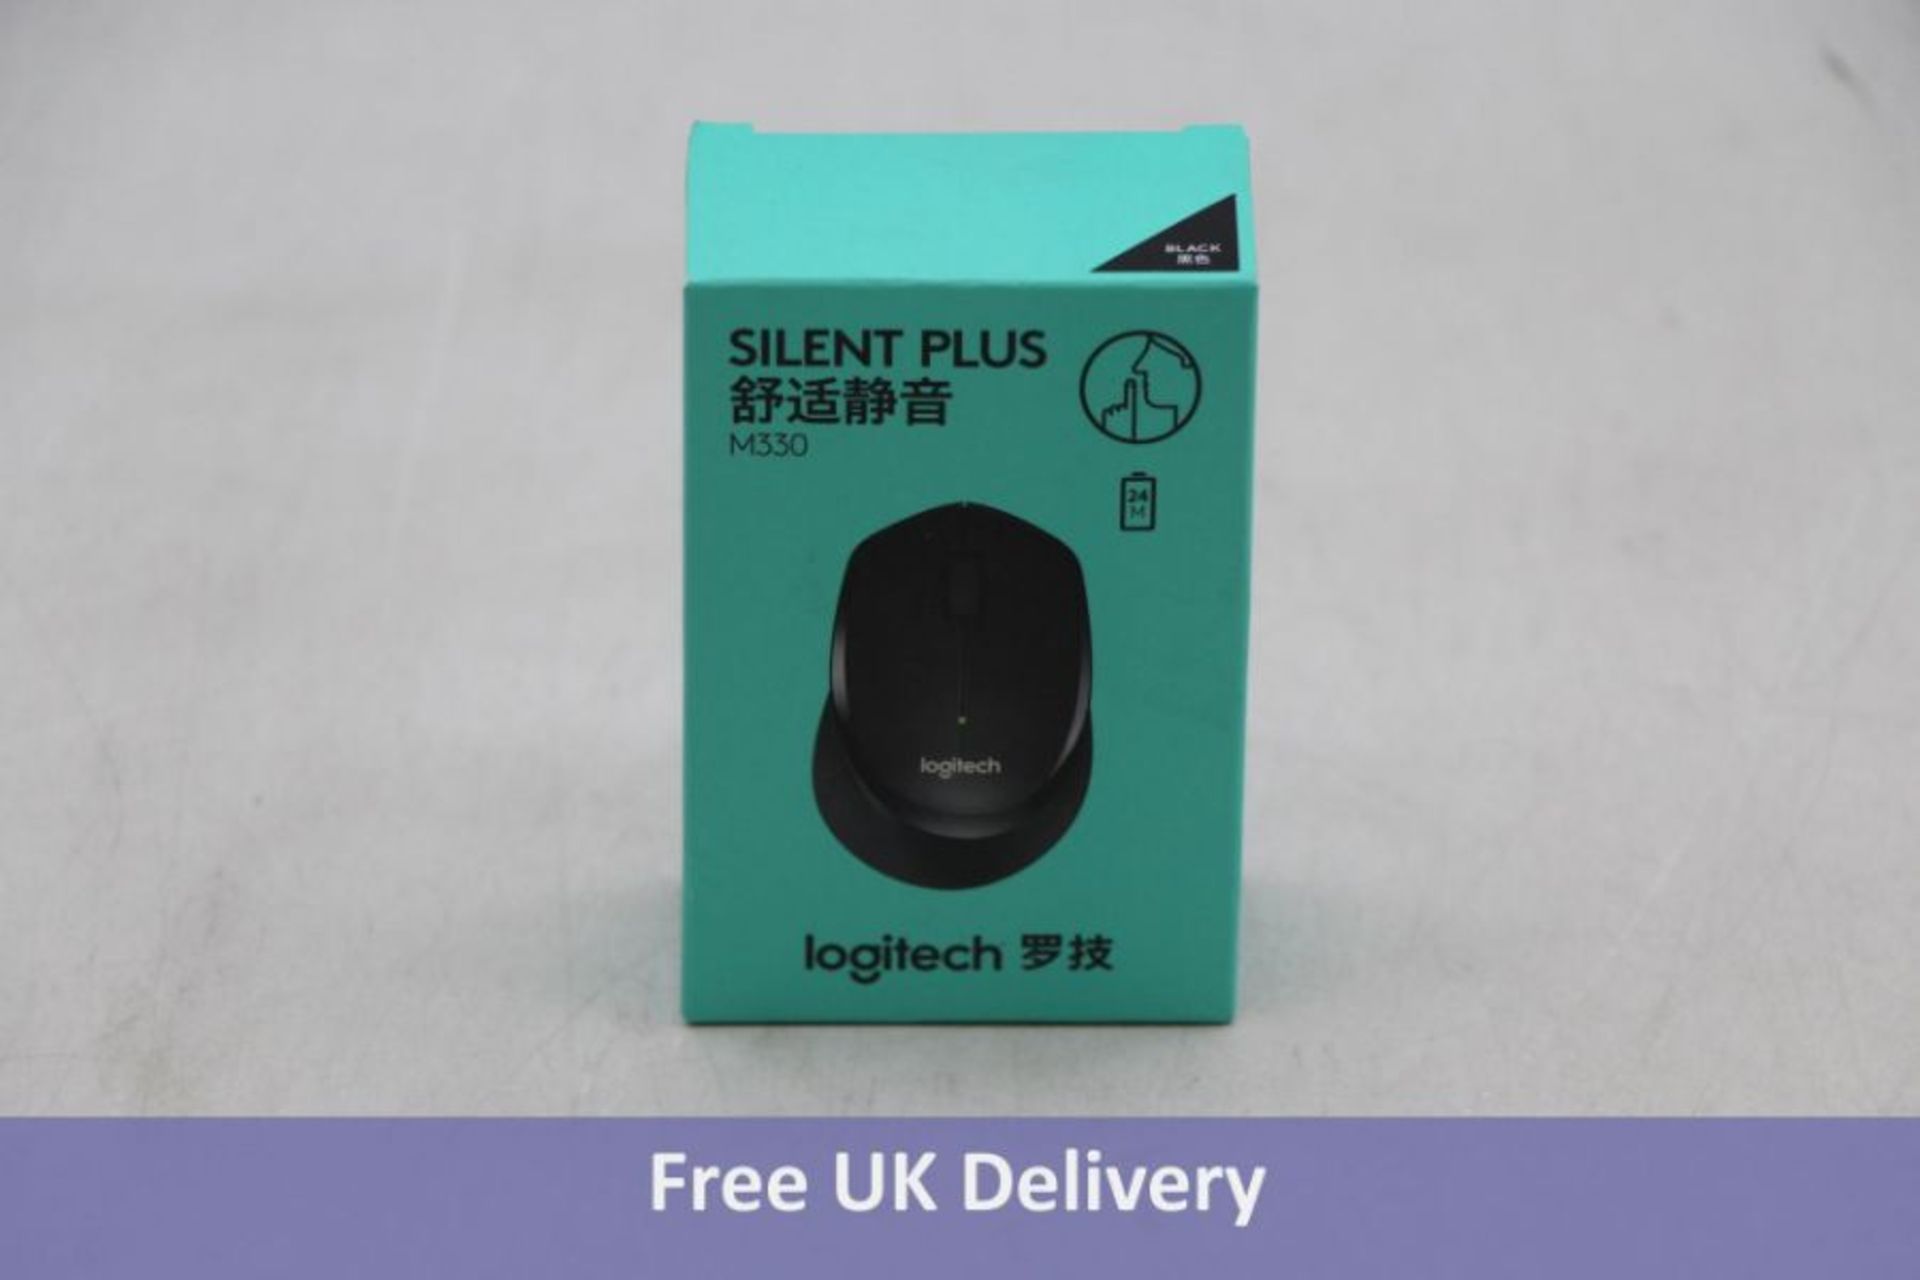 Twenty Logitech M330 Silent Plus Wireless Mice, Black - Image 2 of 4